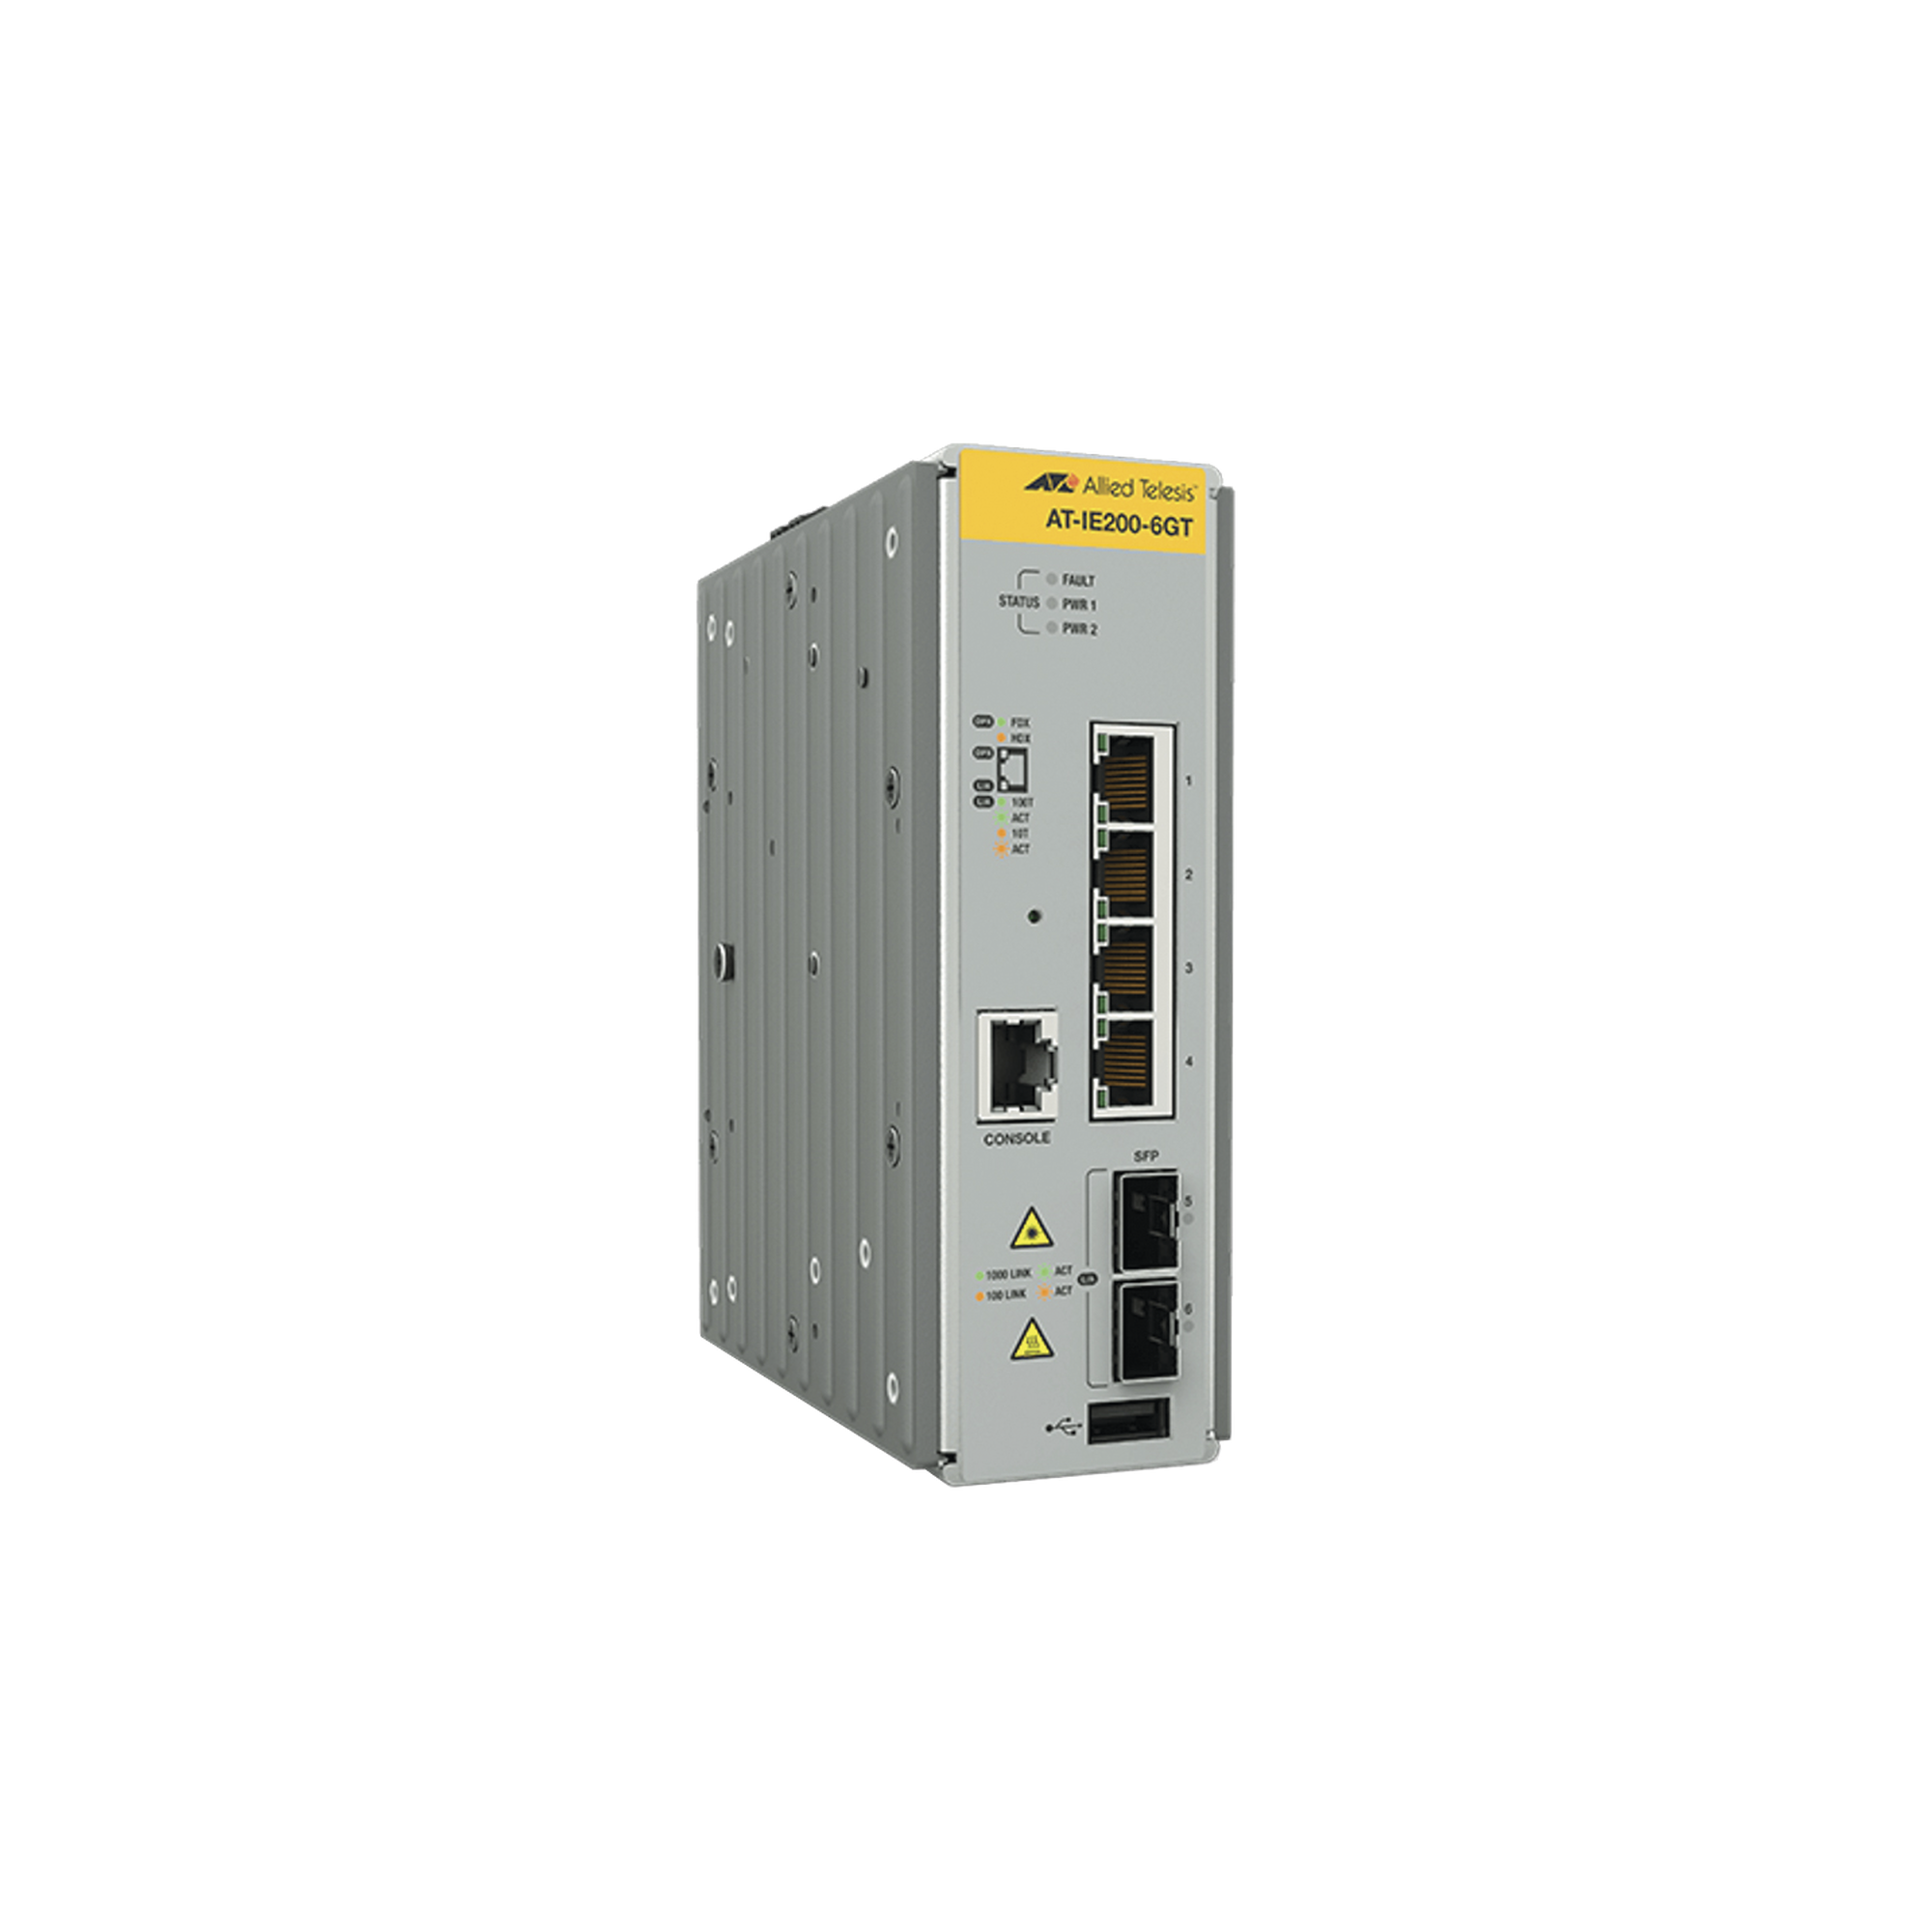 Switch Industrial Administrable Capa 2 de 4 Puertos 10/100/1000 Mbps + 2 Puertos SFP